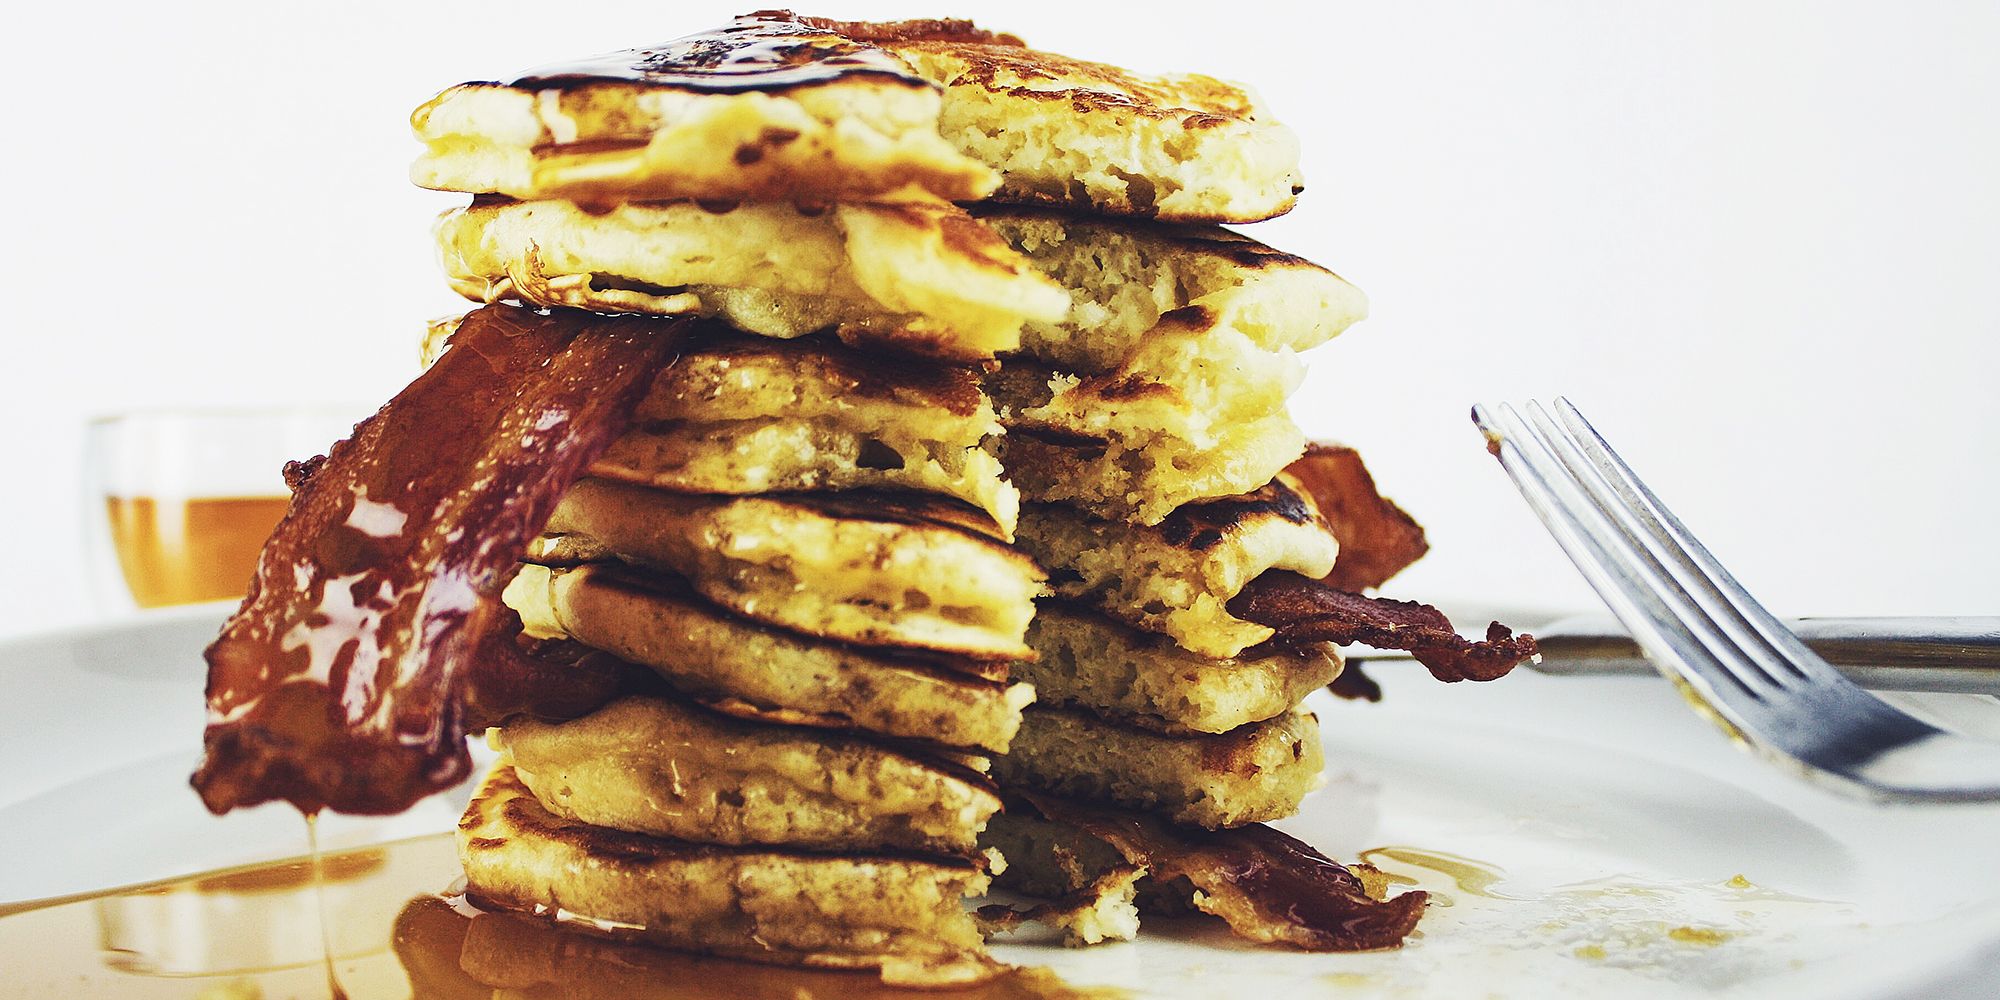 How to Make Perfect Pancakes - Best Homemade Pancake Recipe